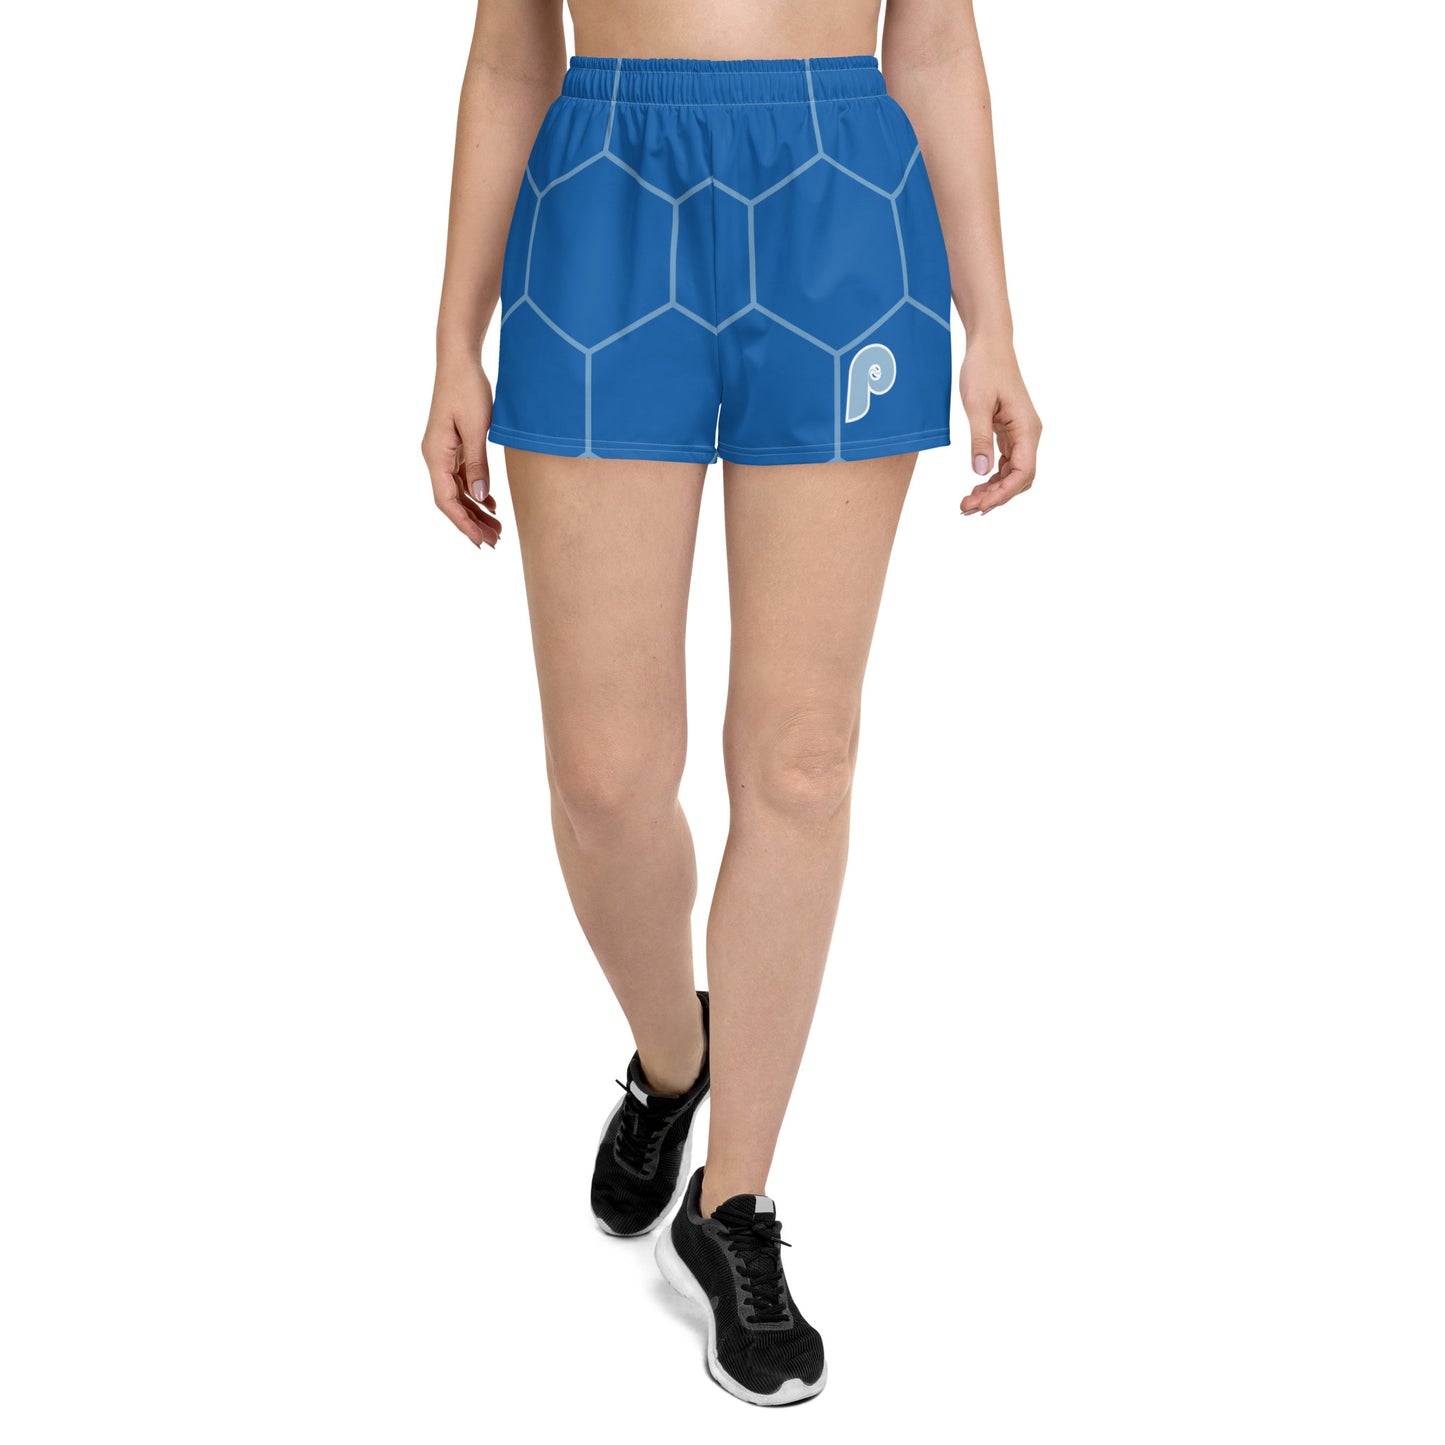 Tampa Phenoms Honeycomb Women’s Athletic Shorts